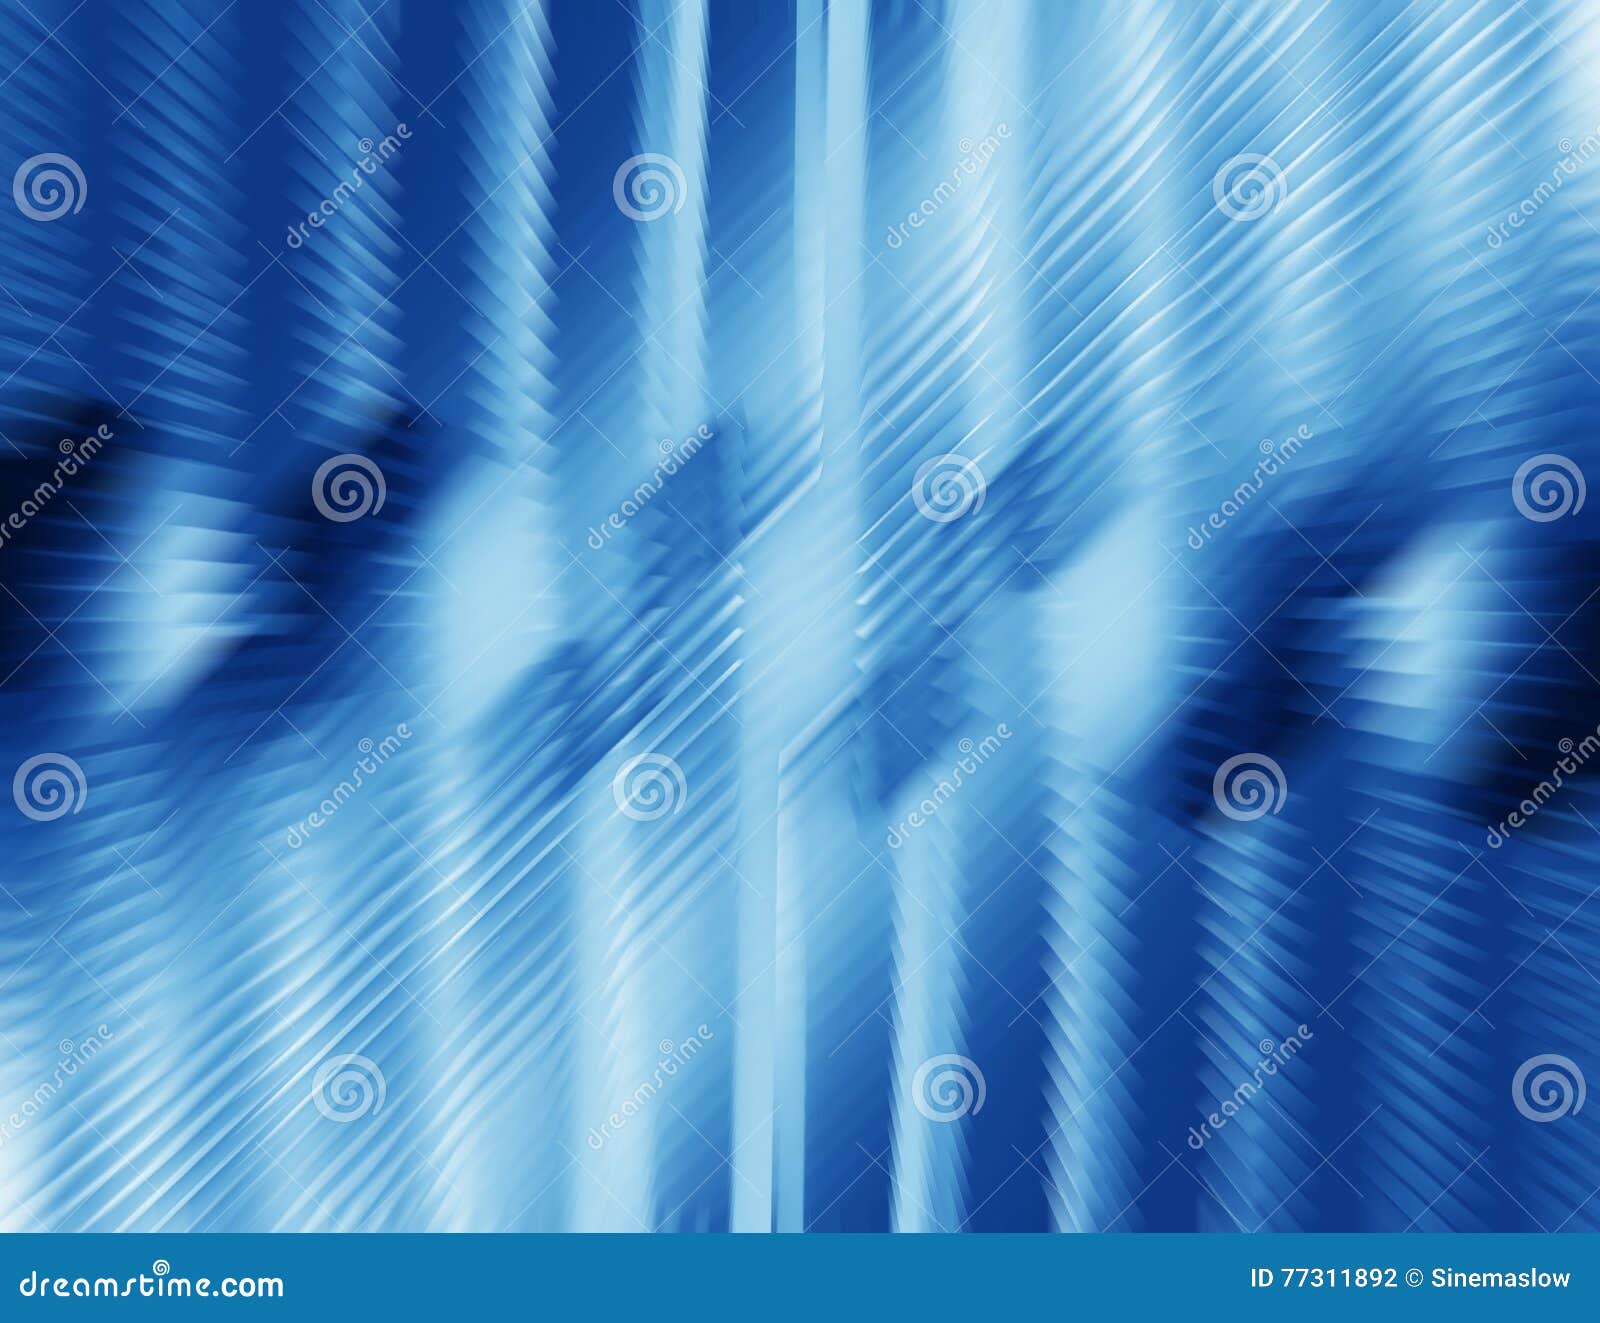 Blue Motion Blur Abstract Background Stock Illustration - Illustration ...